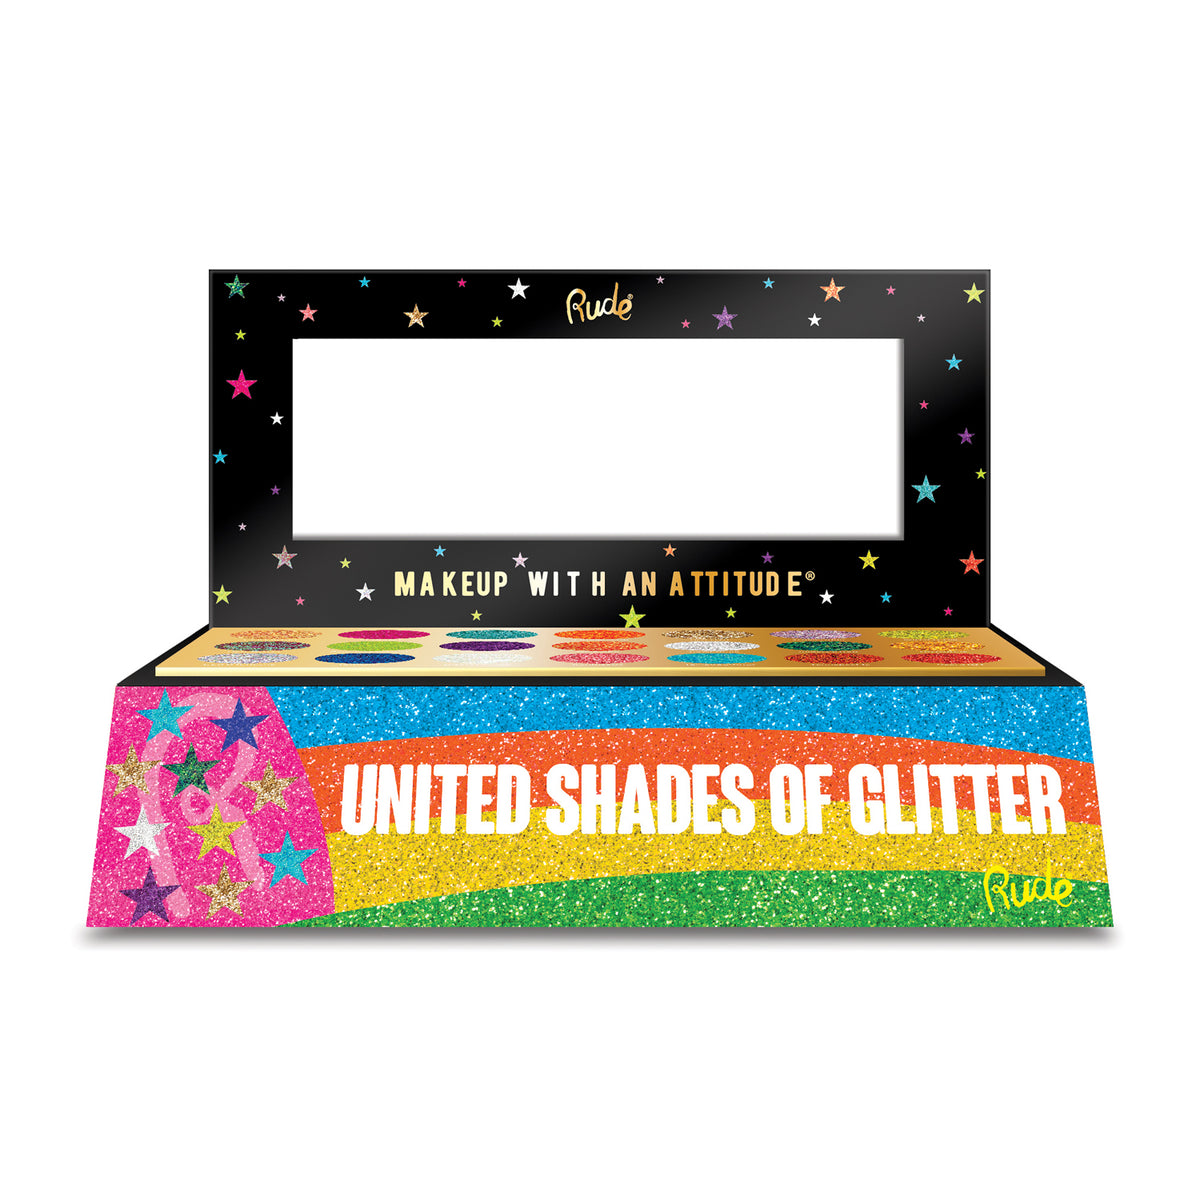 United Shades of Glitter Pressed Glitter Palette Display Set, 12pcs